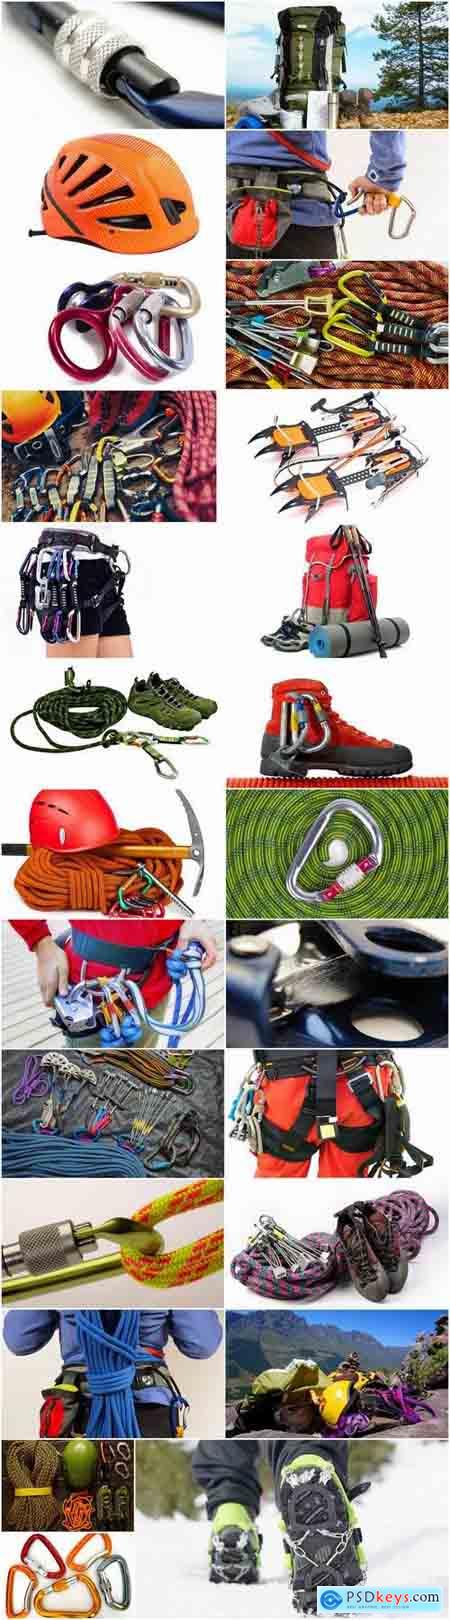 Mountaineering gear carabiner rope shoes ice ax helmet mount 25 HQ Jpeg